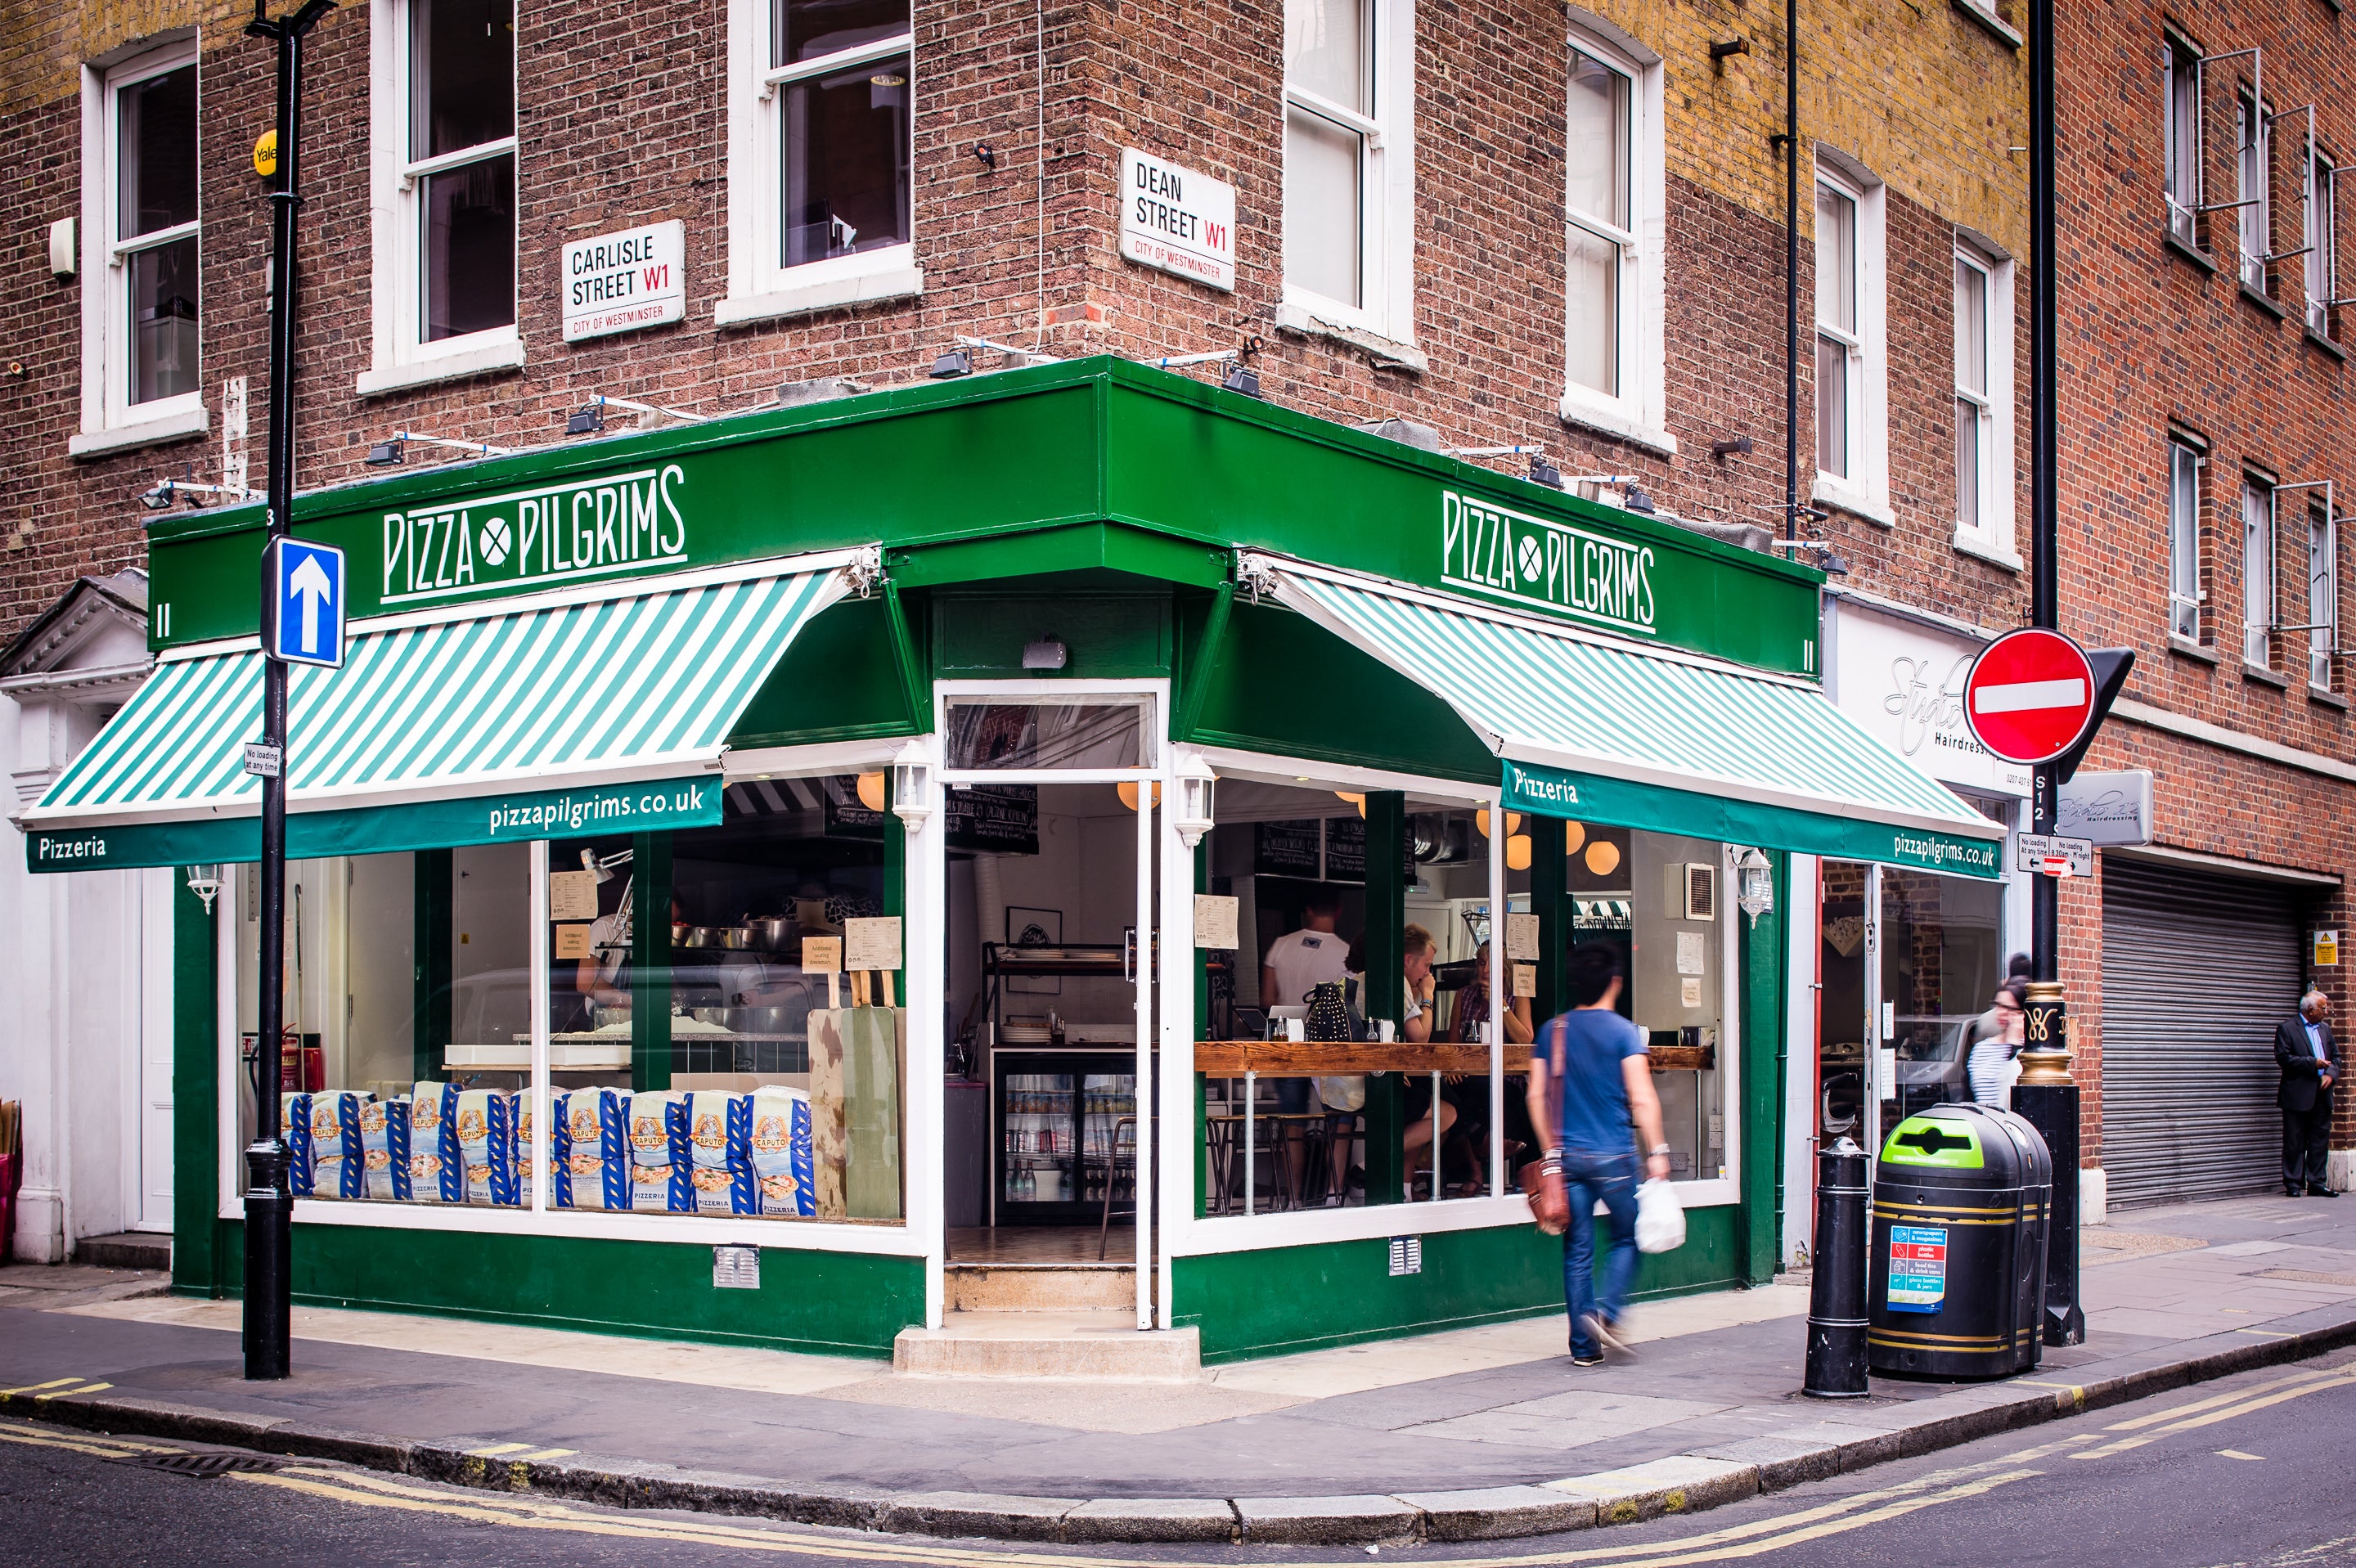 Pizza Pilgram’s original location at Dean Street in London. 